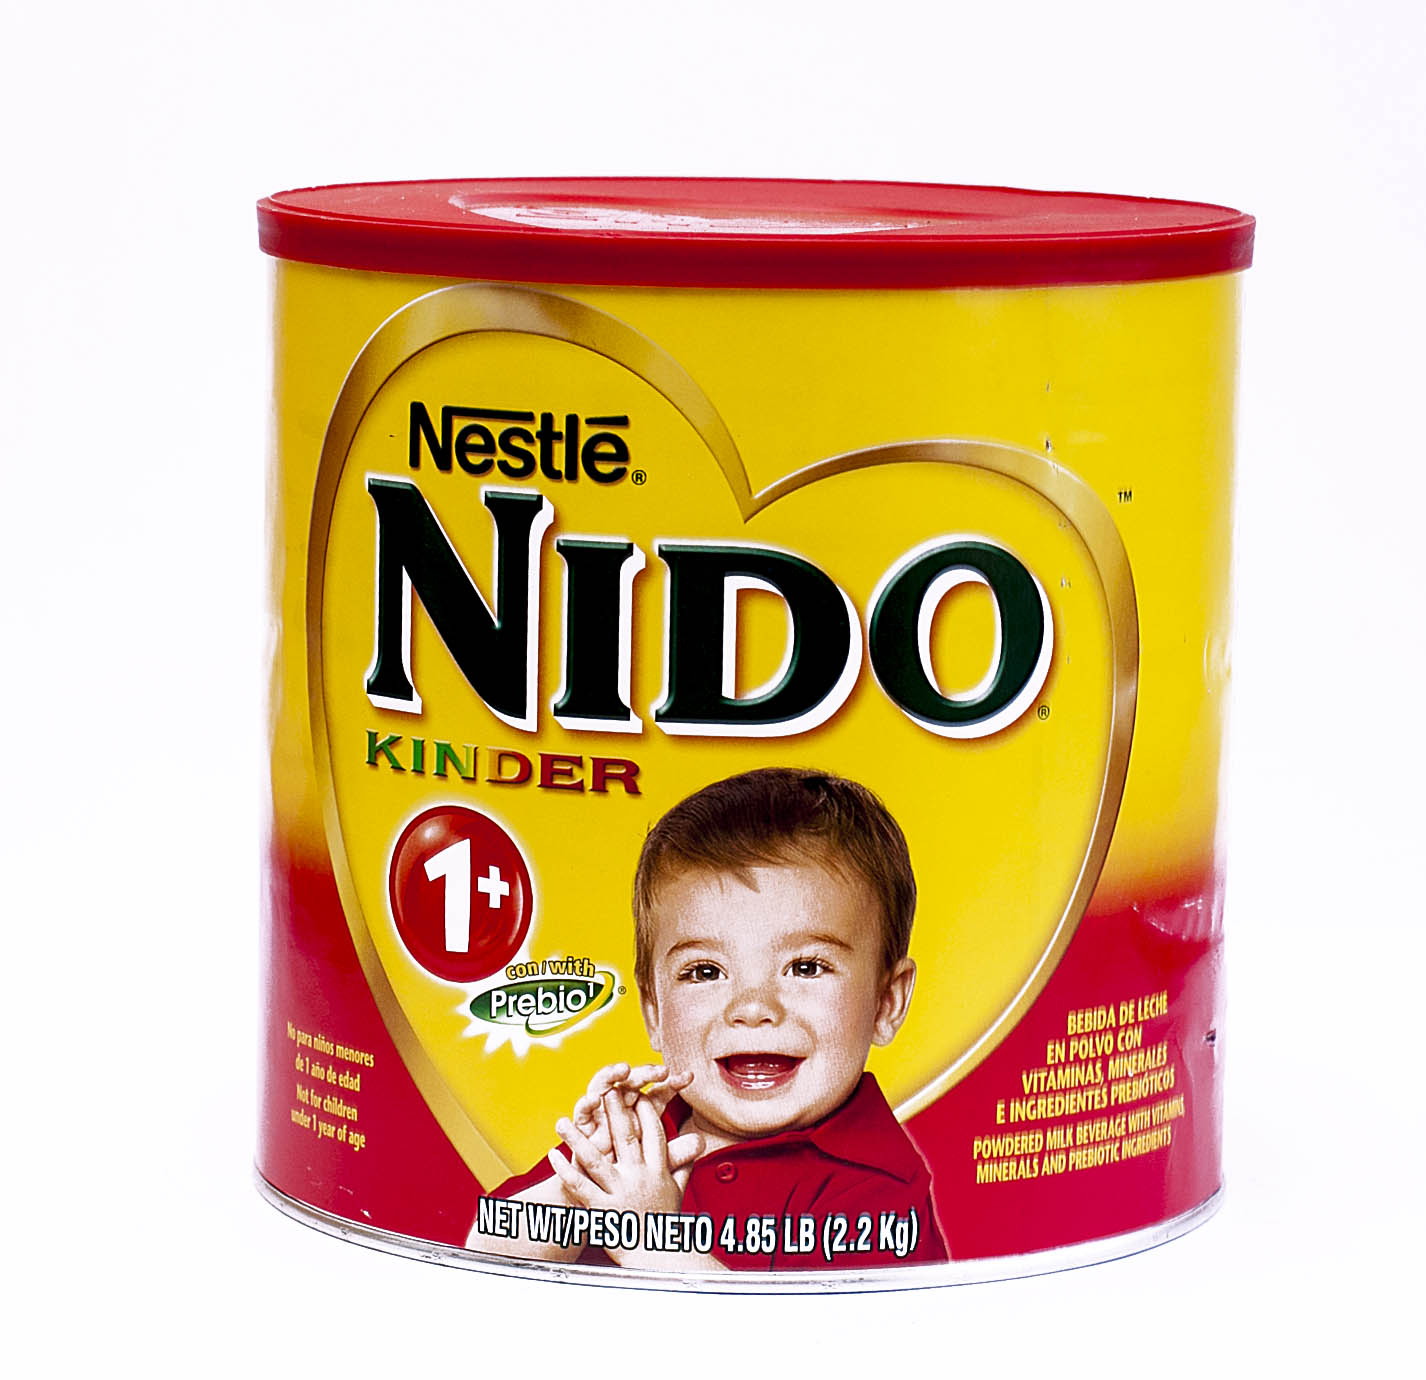 Nestle NIDO Kinder Powdered Milk Beverage